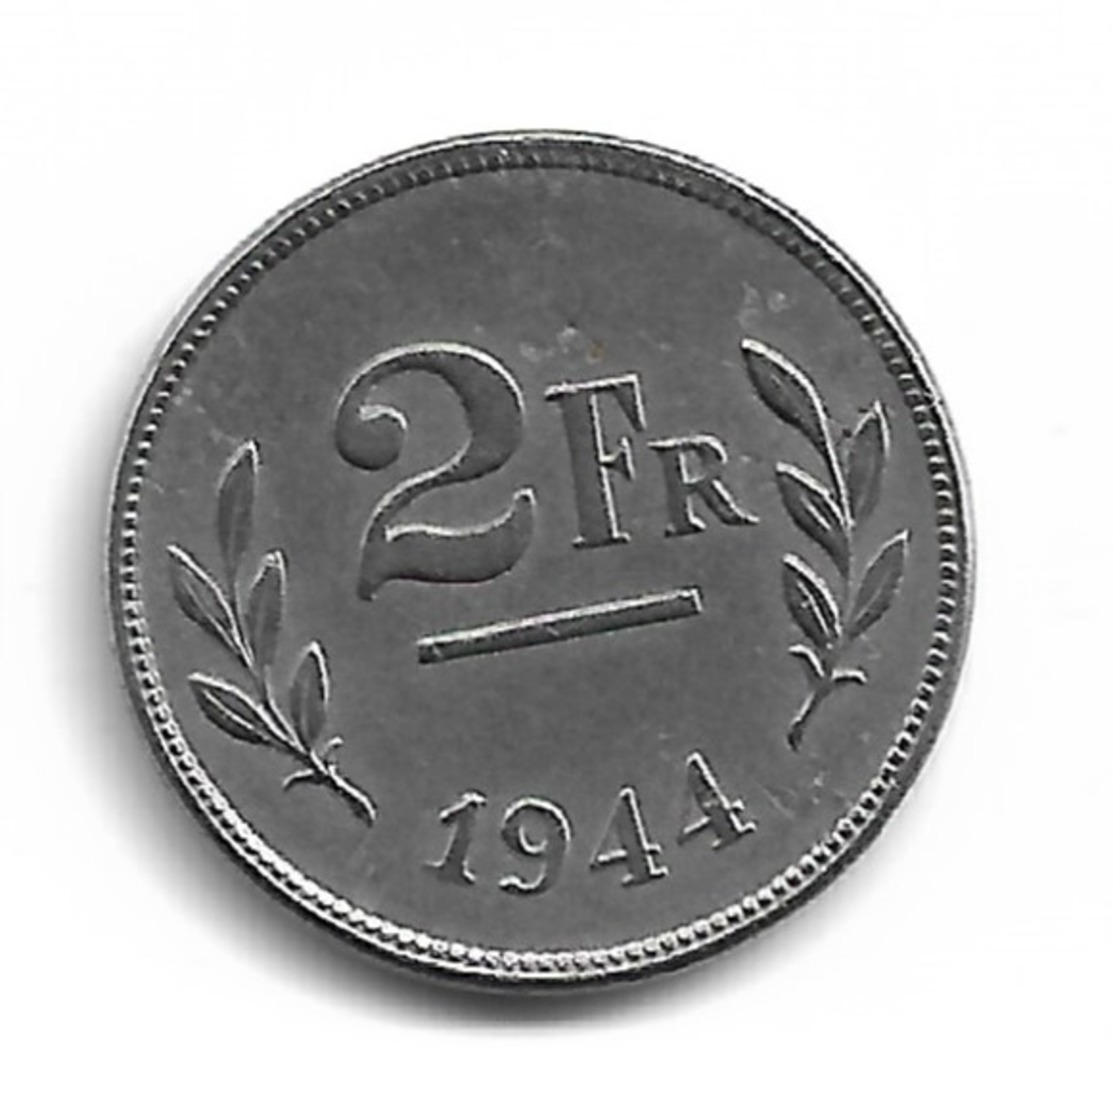 Belgique 2 Francs 1944 FR/FR - Libération - 2 Francs (1944 Liberation)